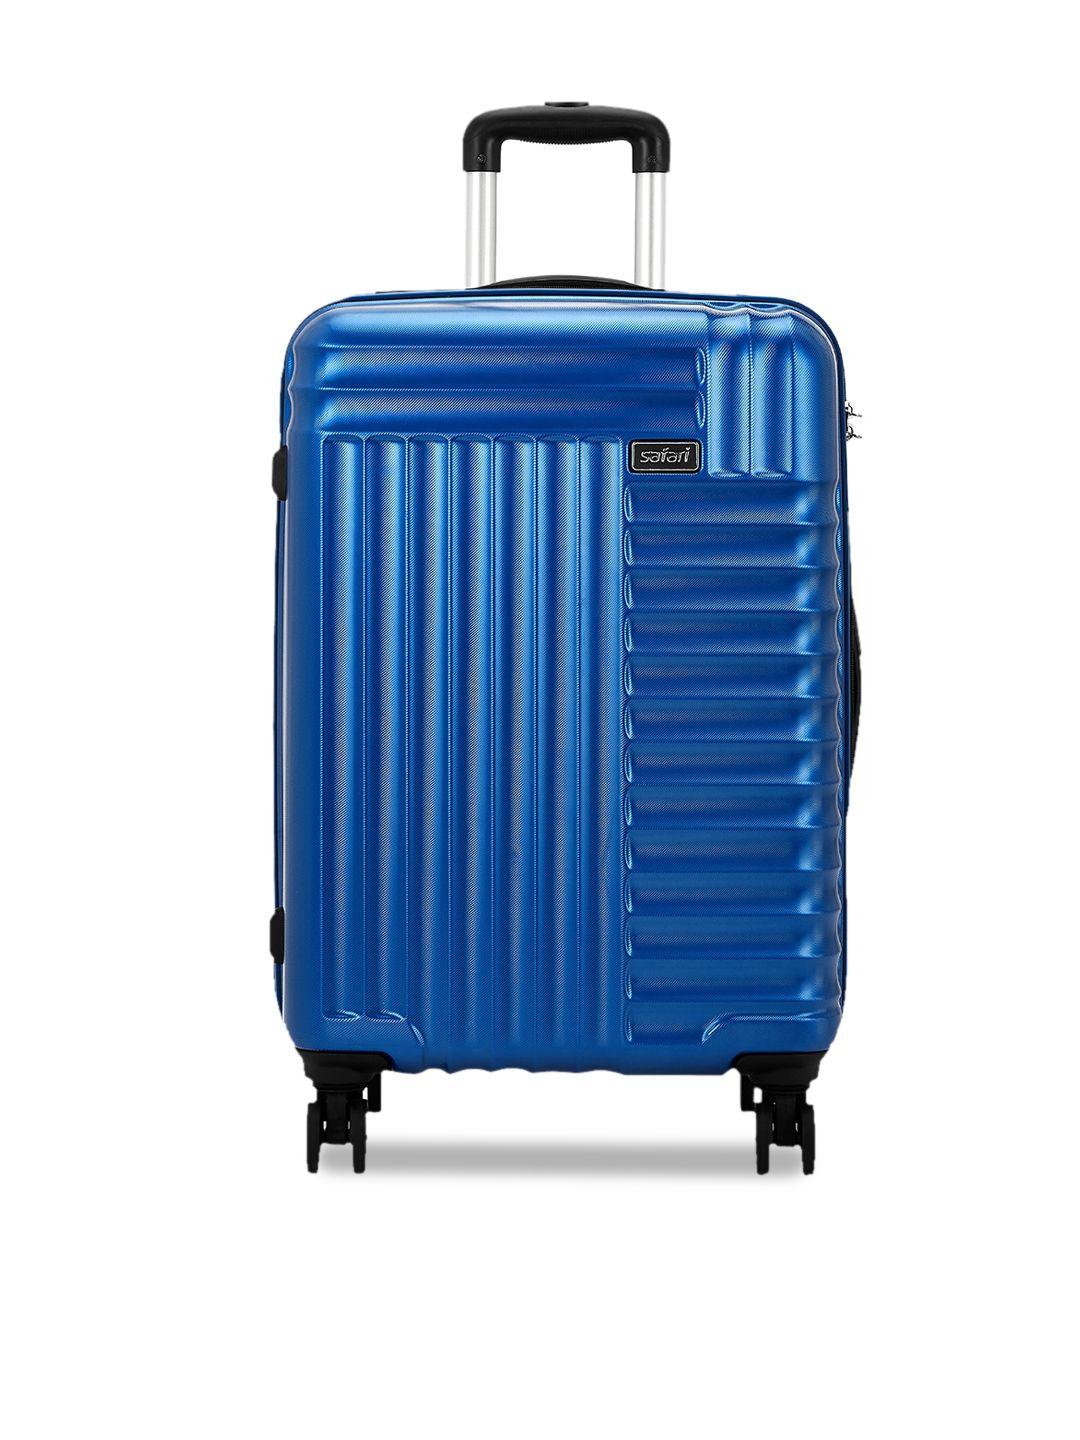 safari blue textured hard-sided large trolley suitcase